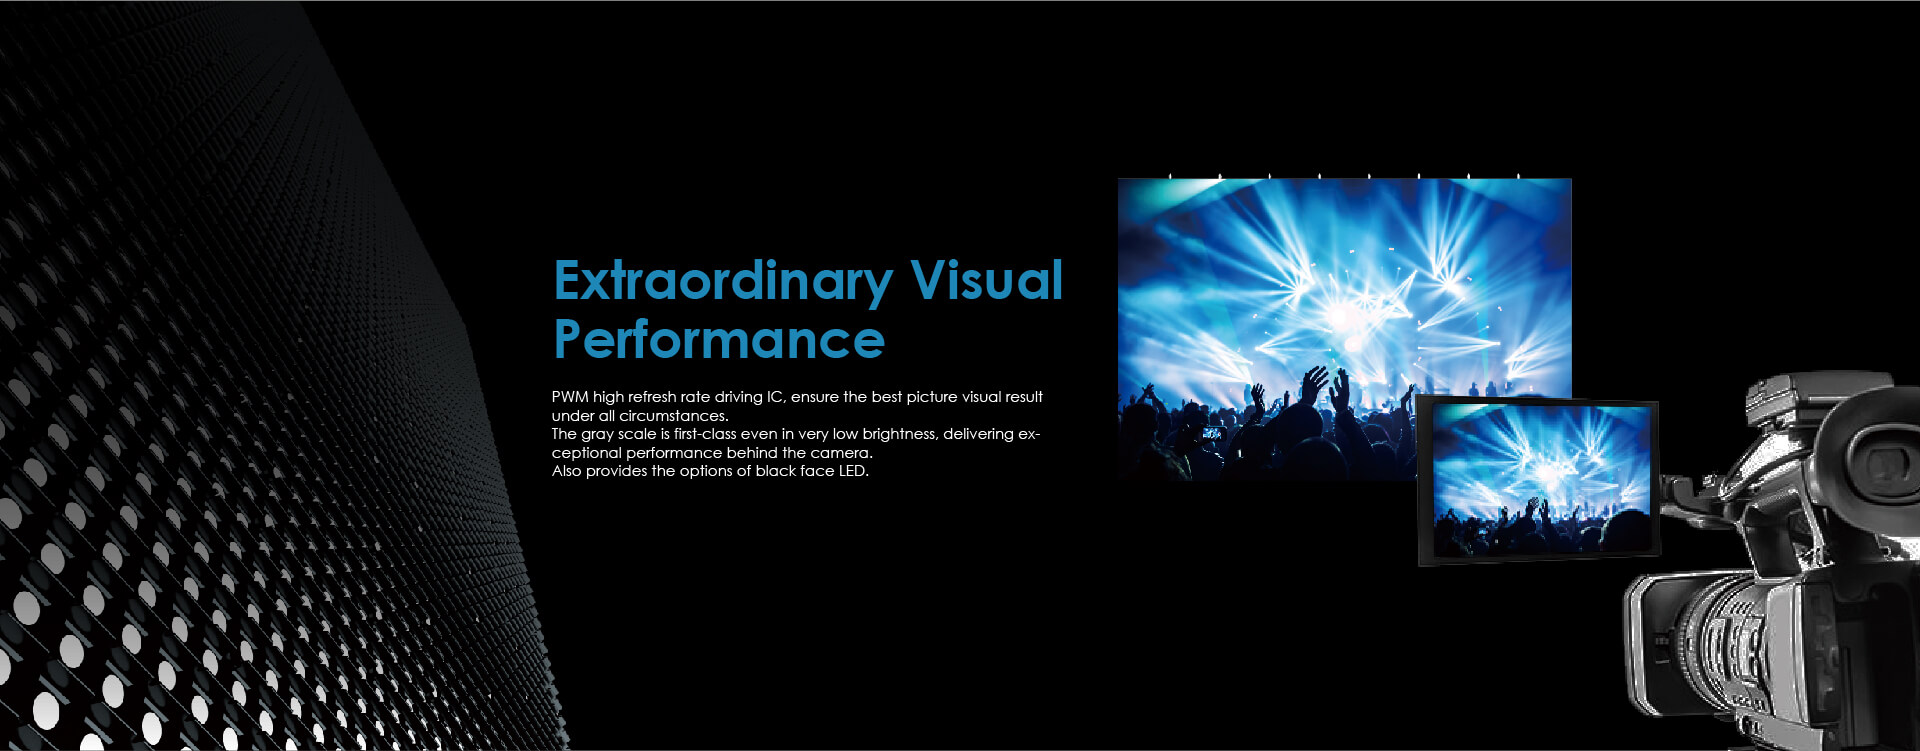 extraordinary visual performance, led screen